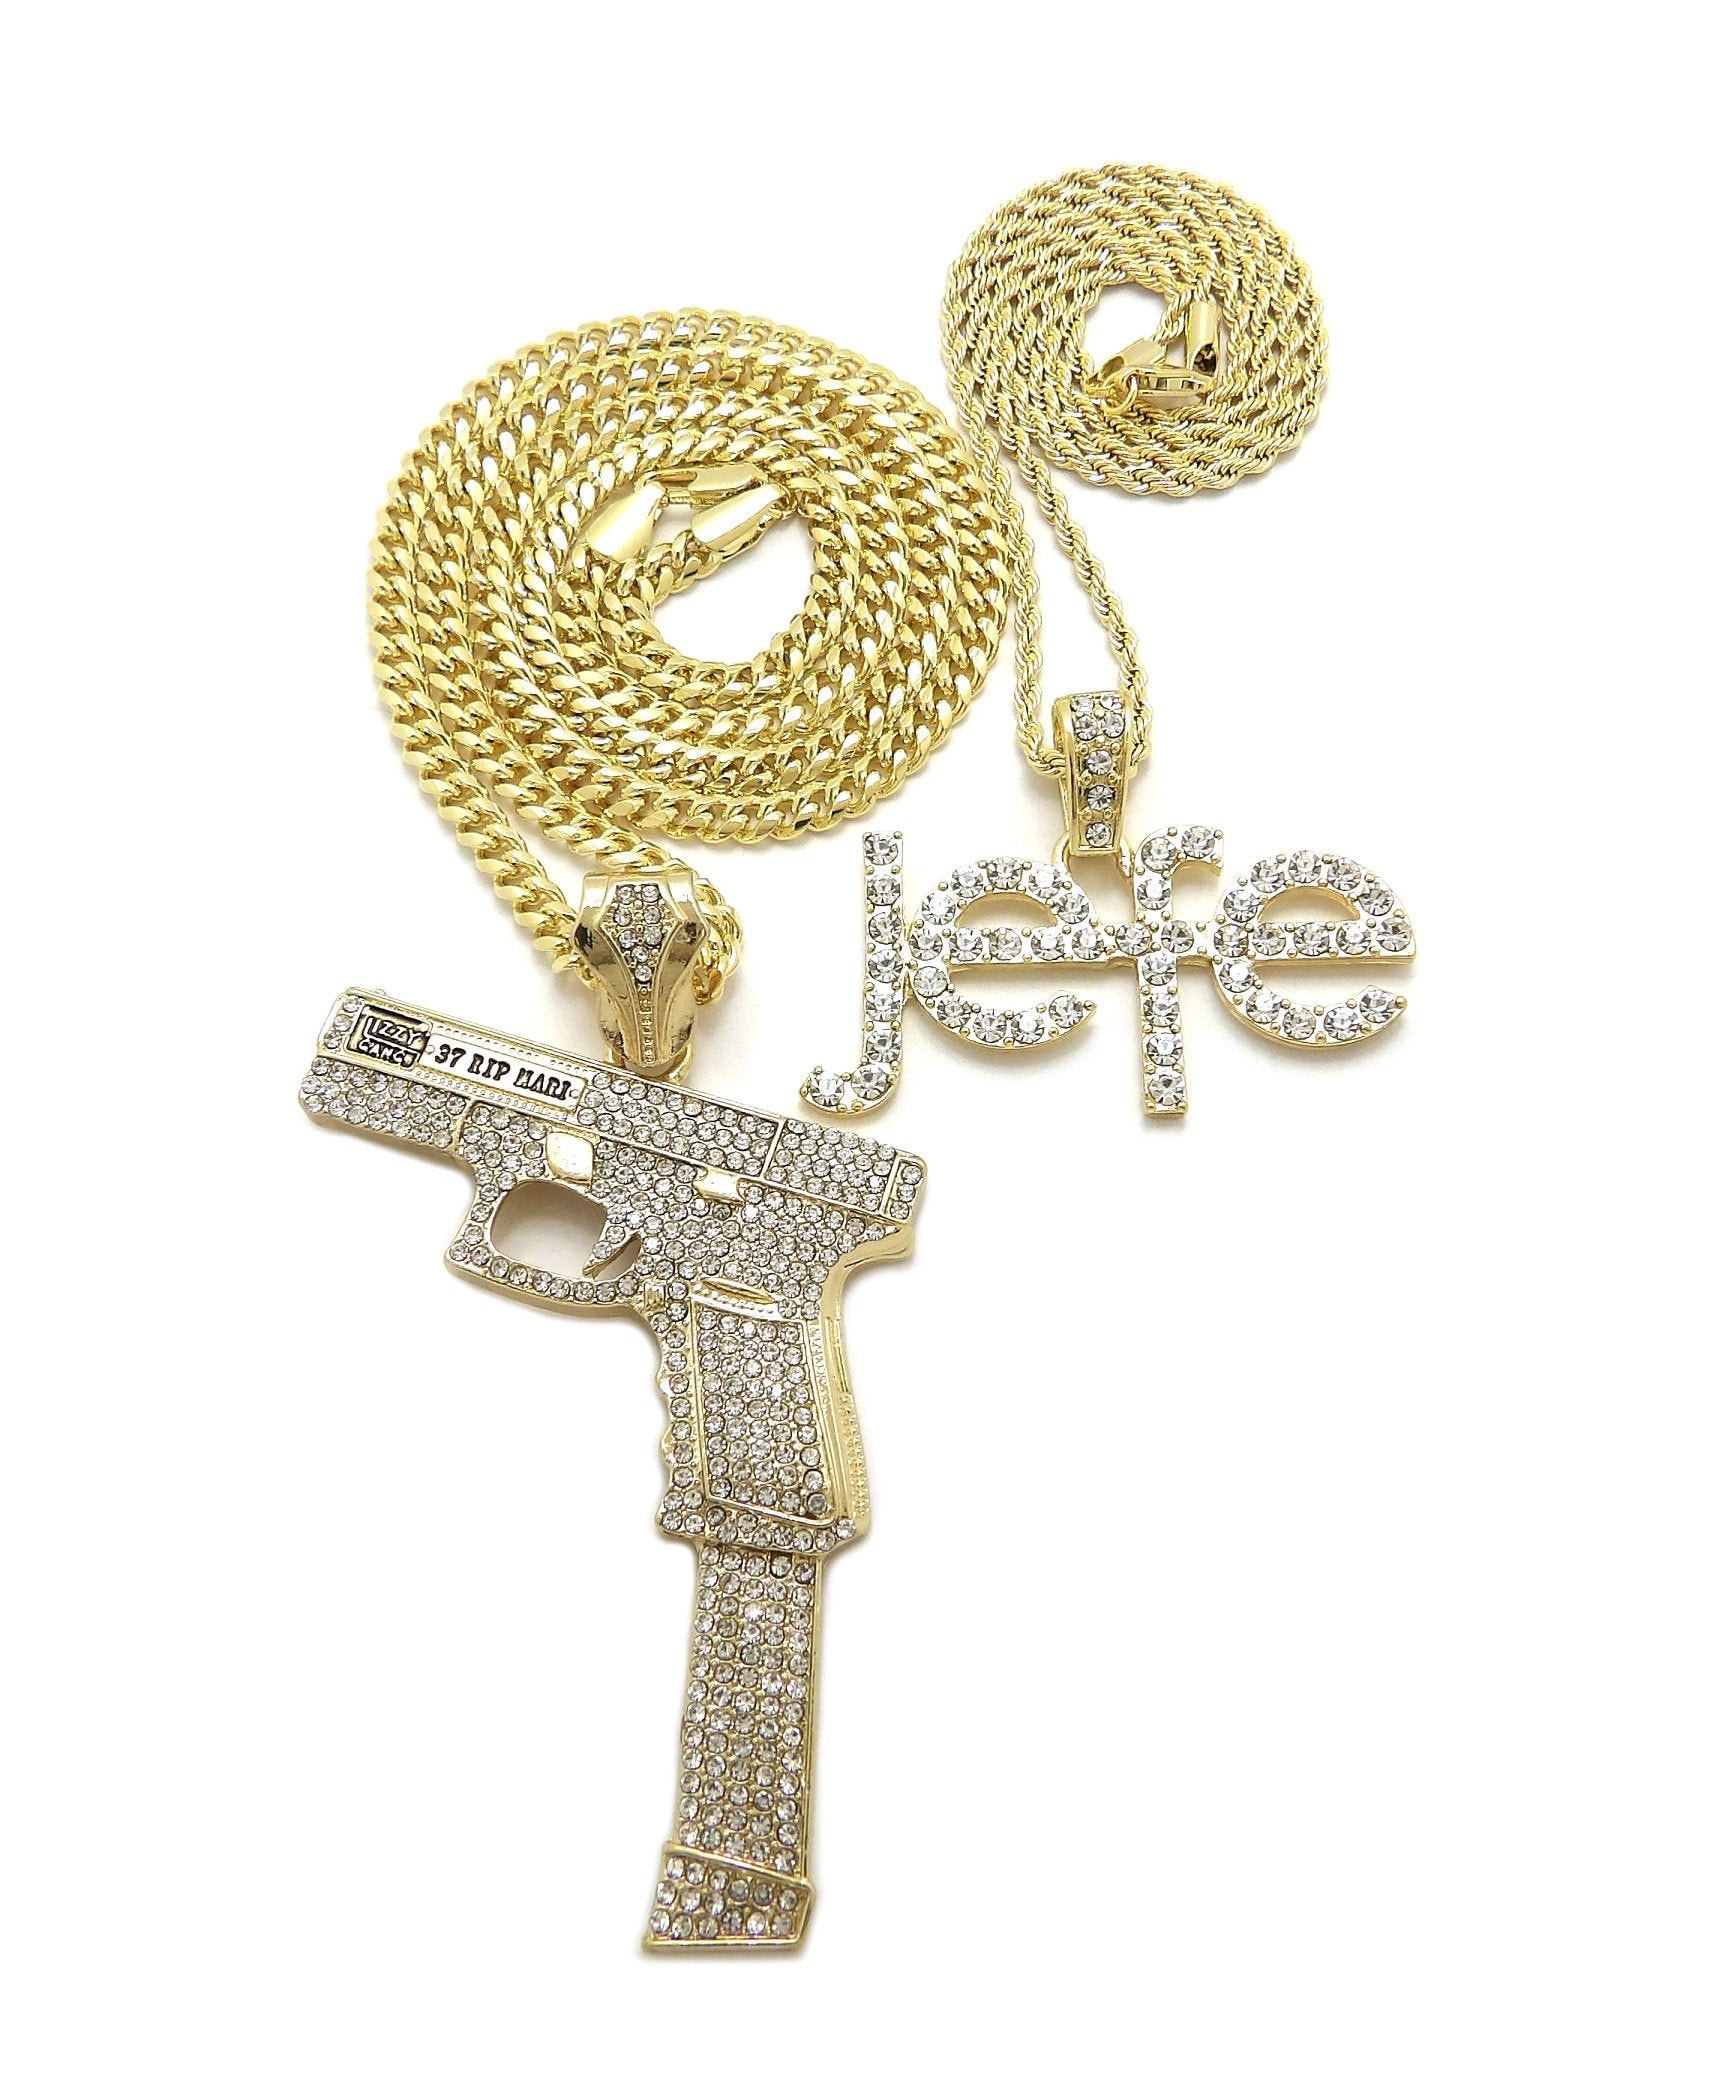 Bysonglezai Necklace Pendant Jewelry Women Chain Men Necklace Ladies Korean  Necklace Statement Jewelry Party Favors